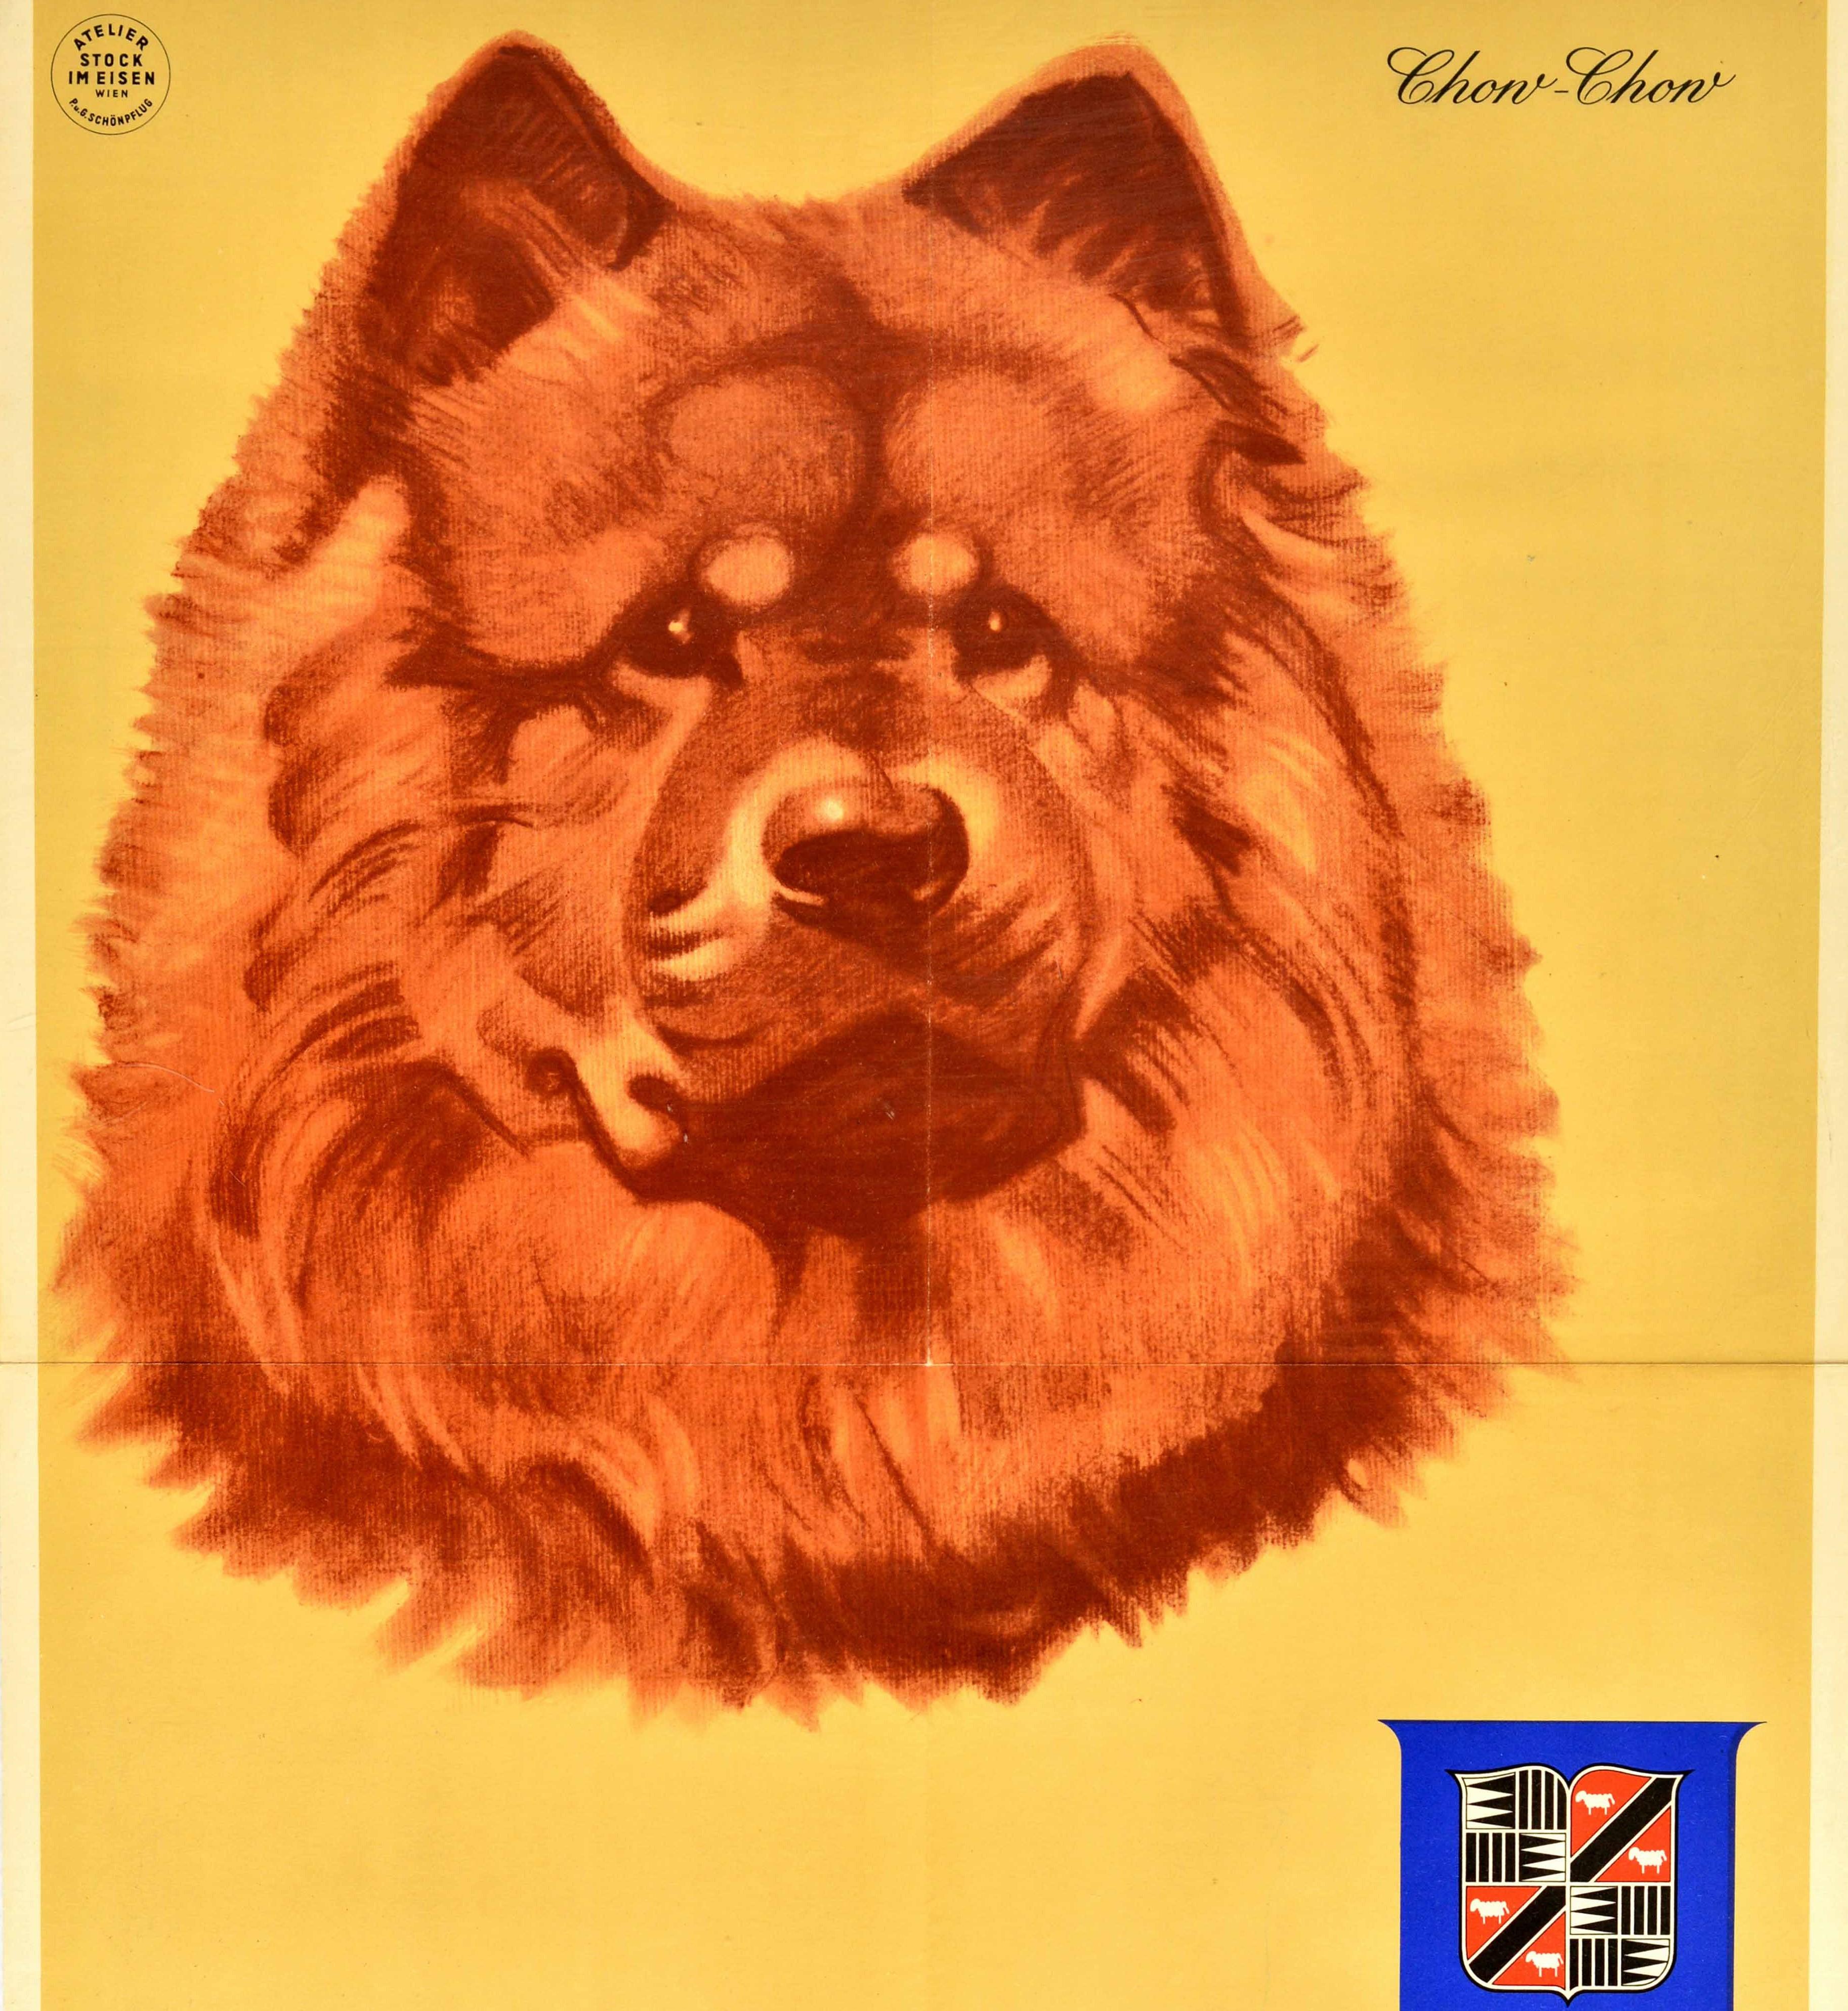 Original Vintage Advertising Poster Selfix Schals Scarves Chow-Chow Dog Artwork - Orange Print by Unknown